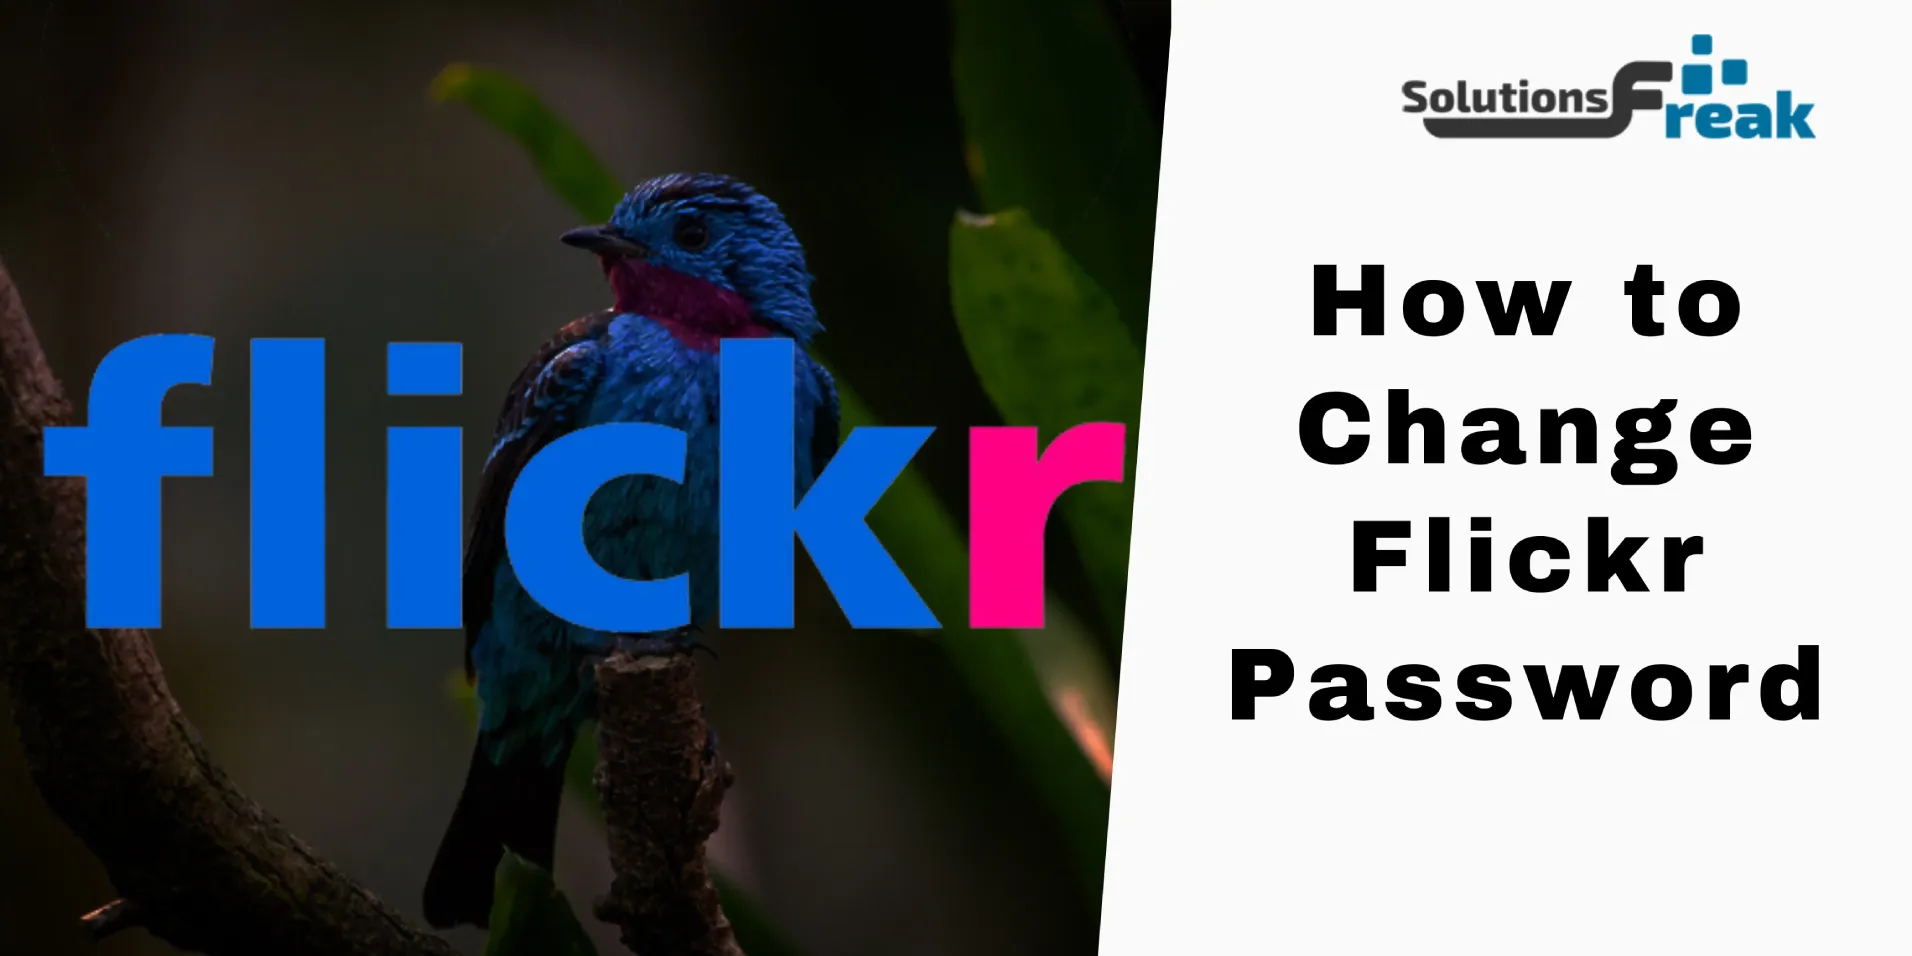 How to Change Flickr Password